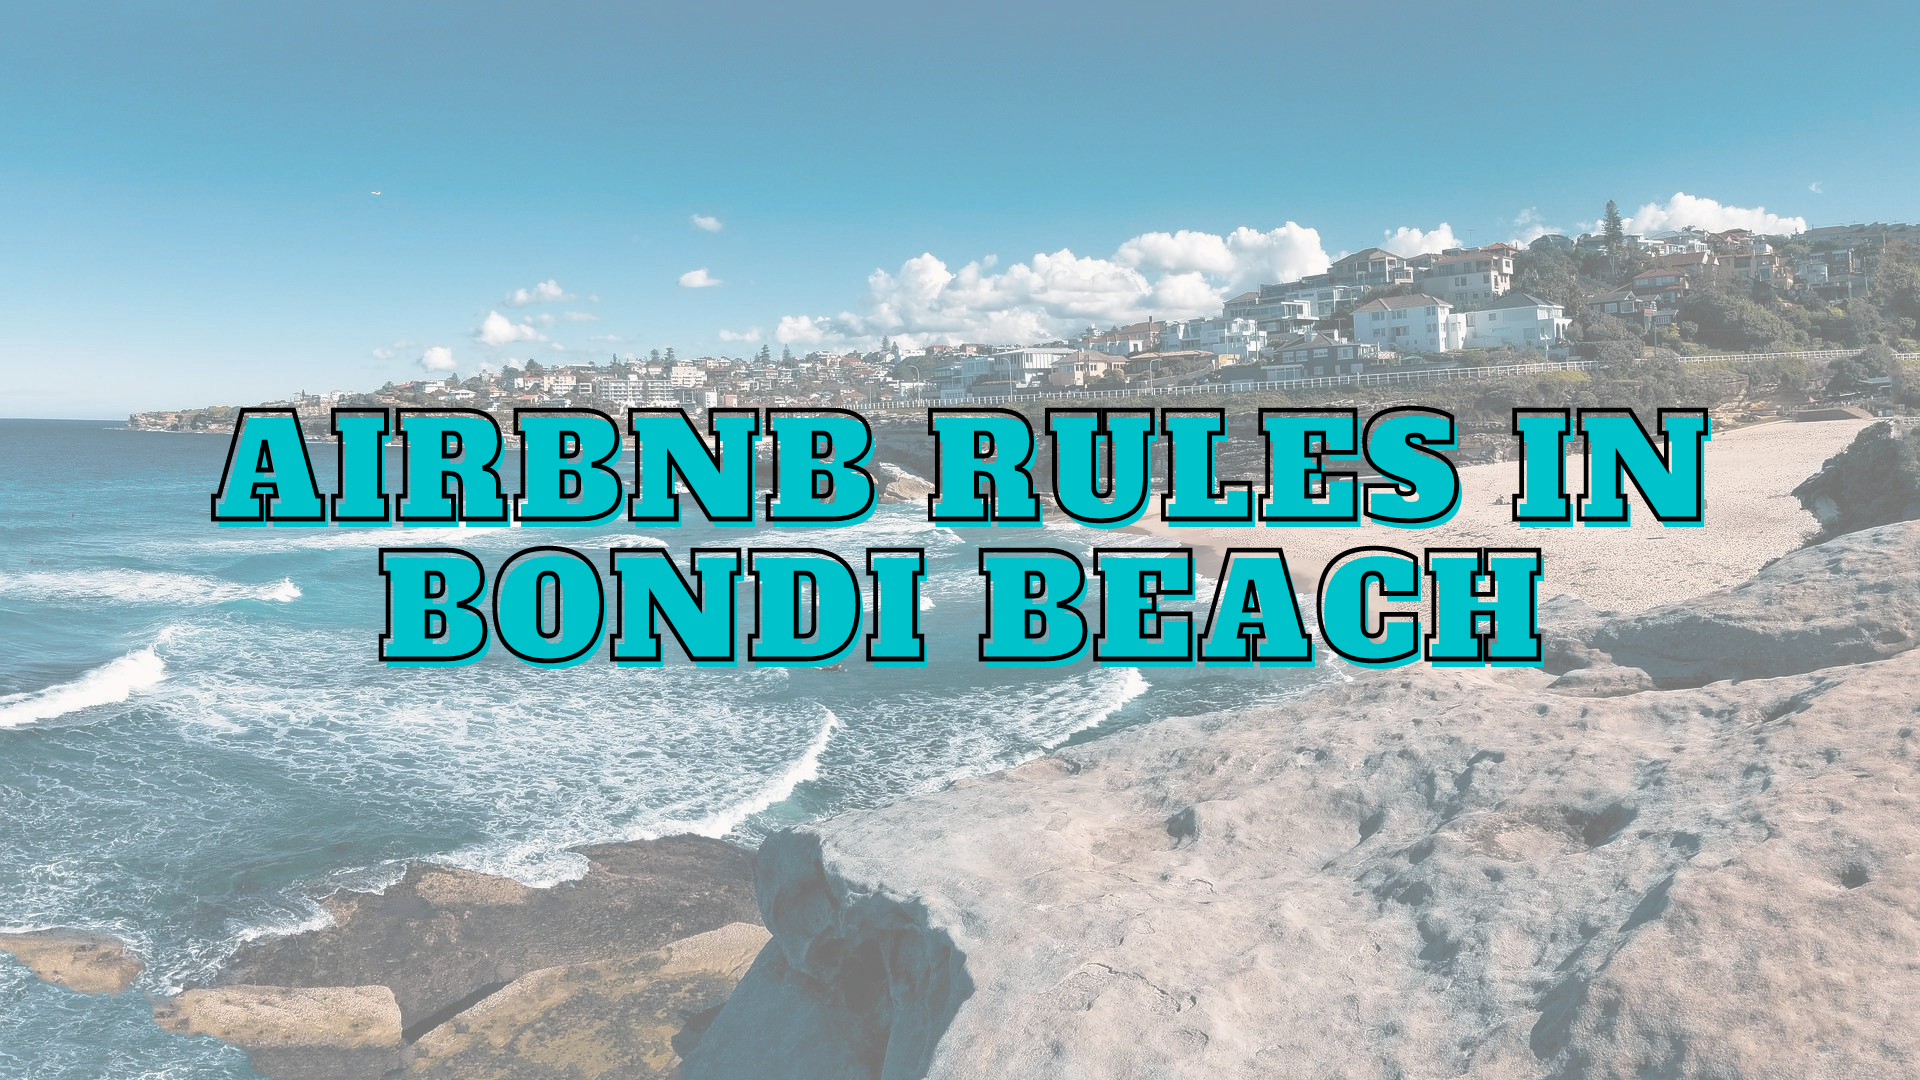 bondi beach airbnb rules